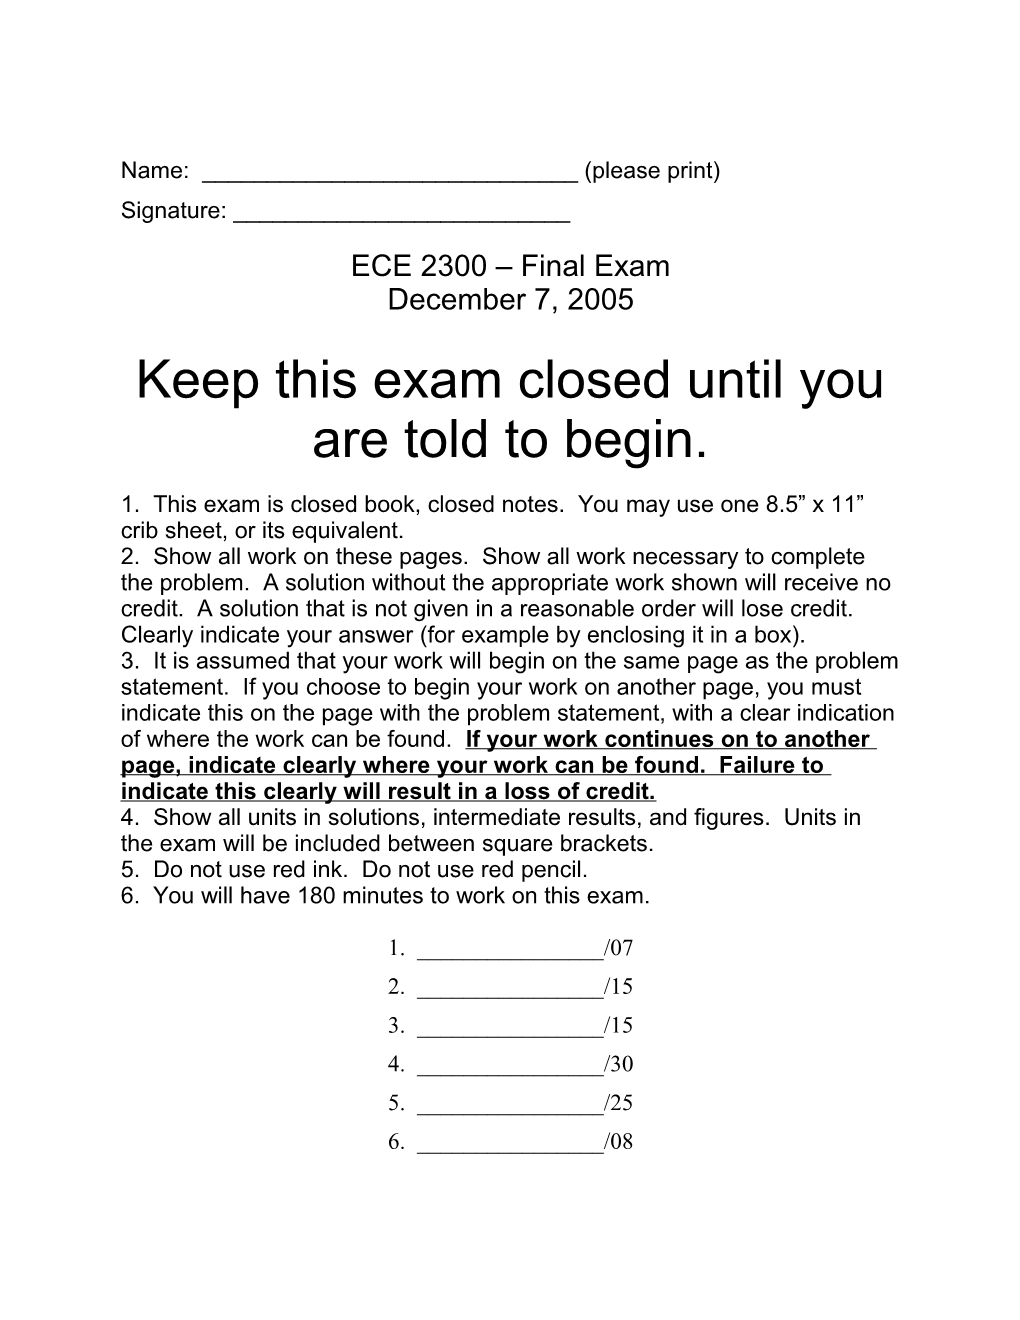 ECE 2300 Final Exam December 7, 2005 Page 1